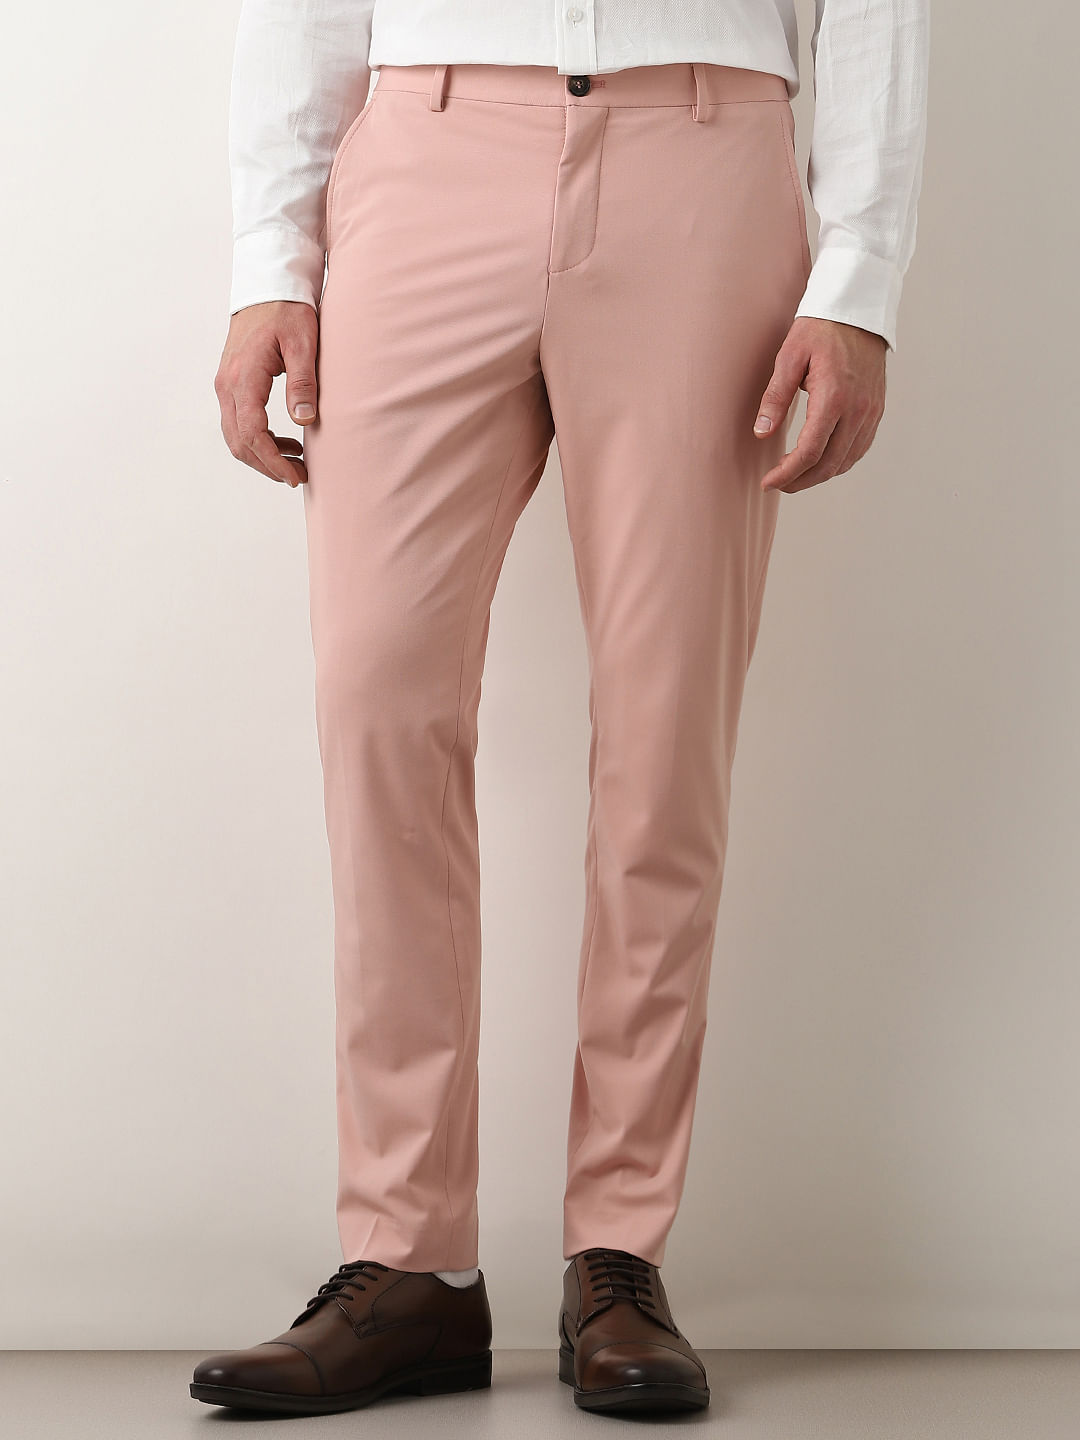 Light Pink Trousers - Candy Dust | Streetwear pants for men